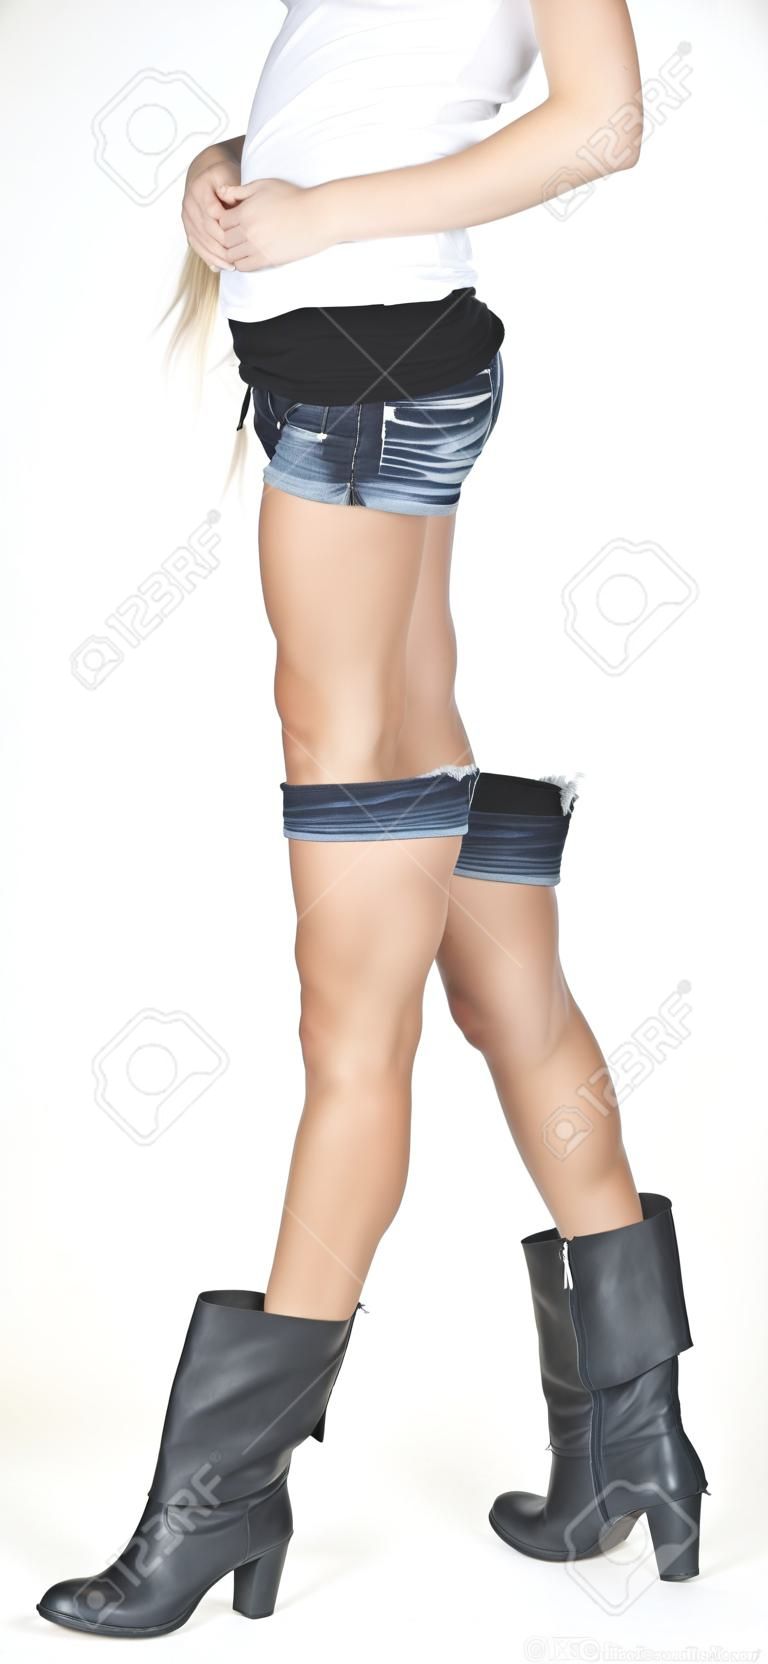 Tough Blond Teen Girl em botas de couro e shorts